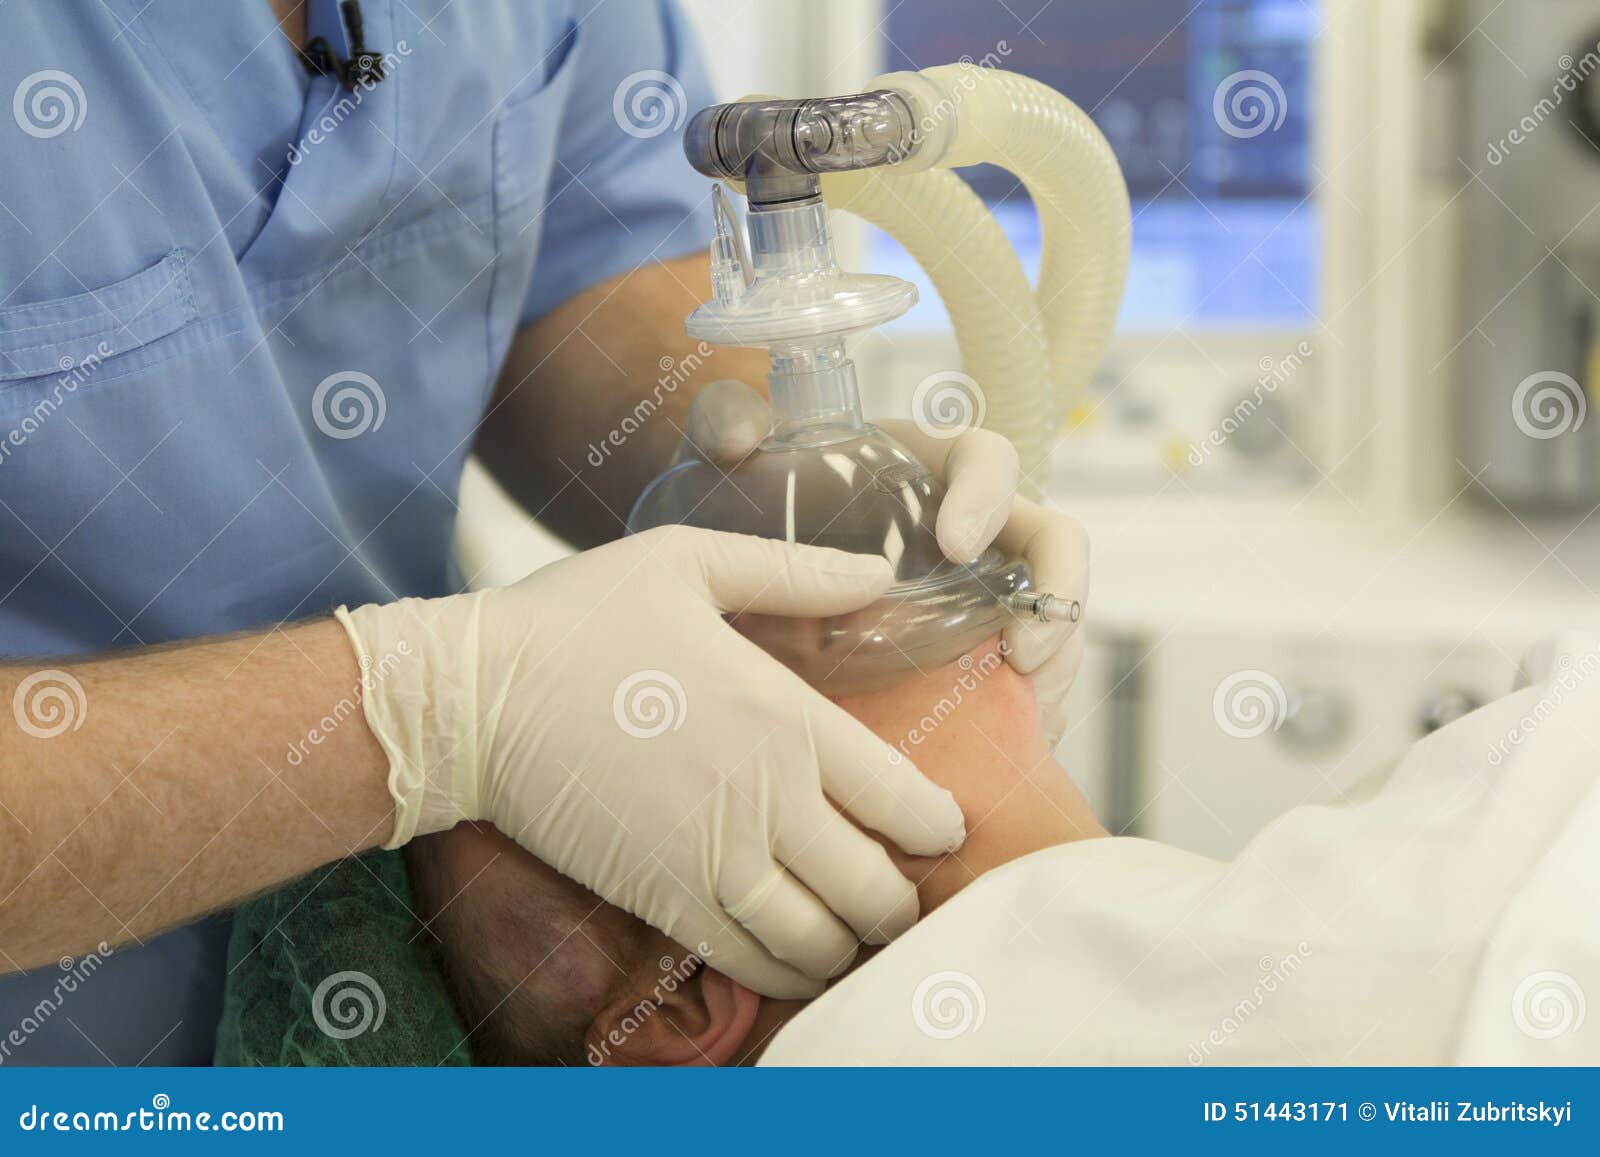 making anesthesia